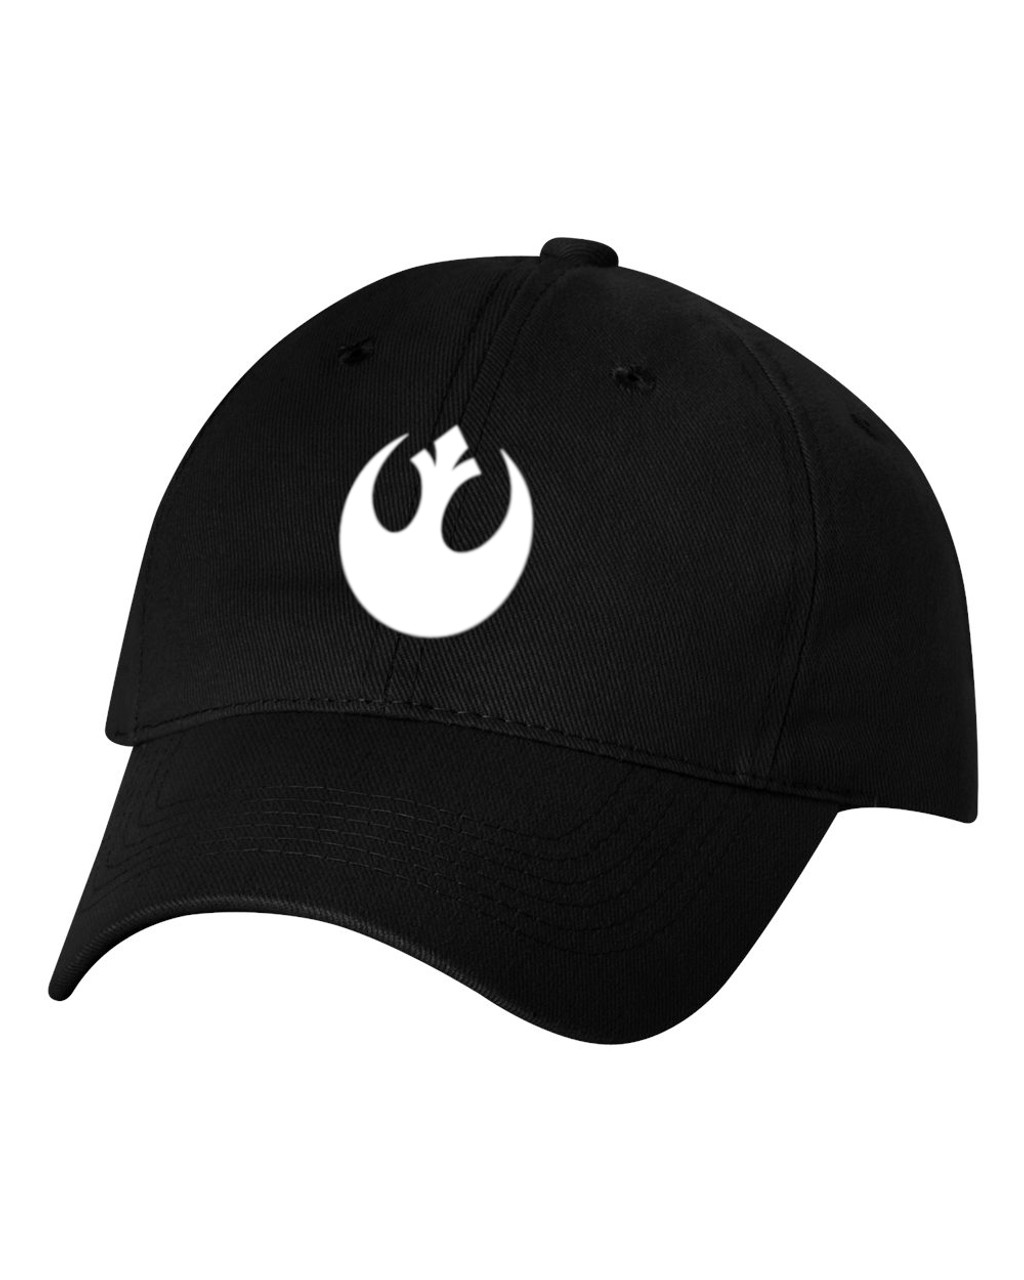 Star Force Rebel Alliance White Emblem Heat Pressed Hat - Adult Black Twill Adjustable Cap